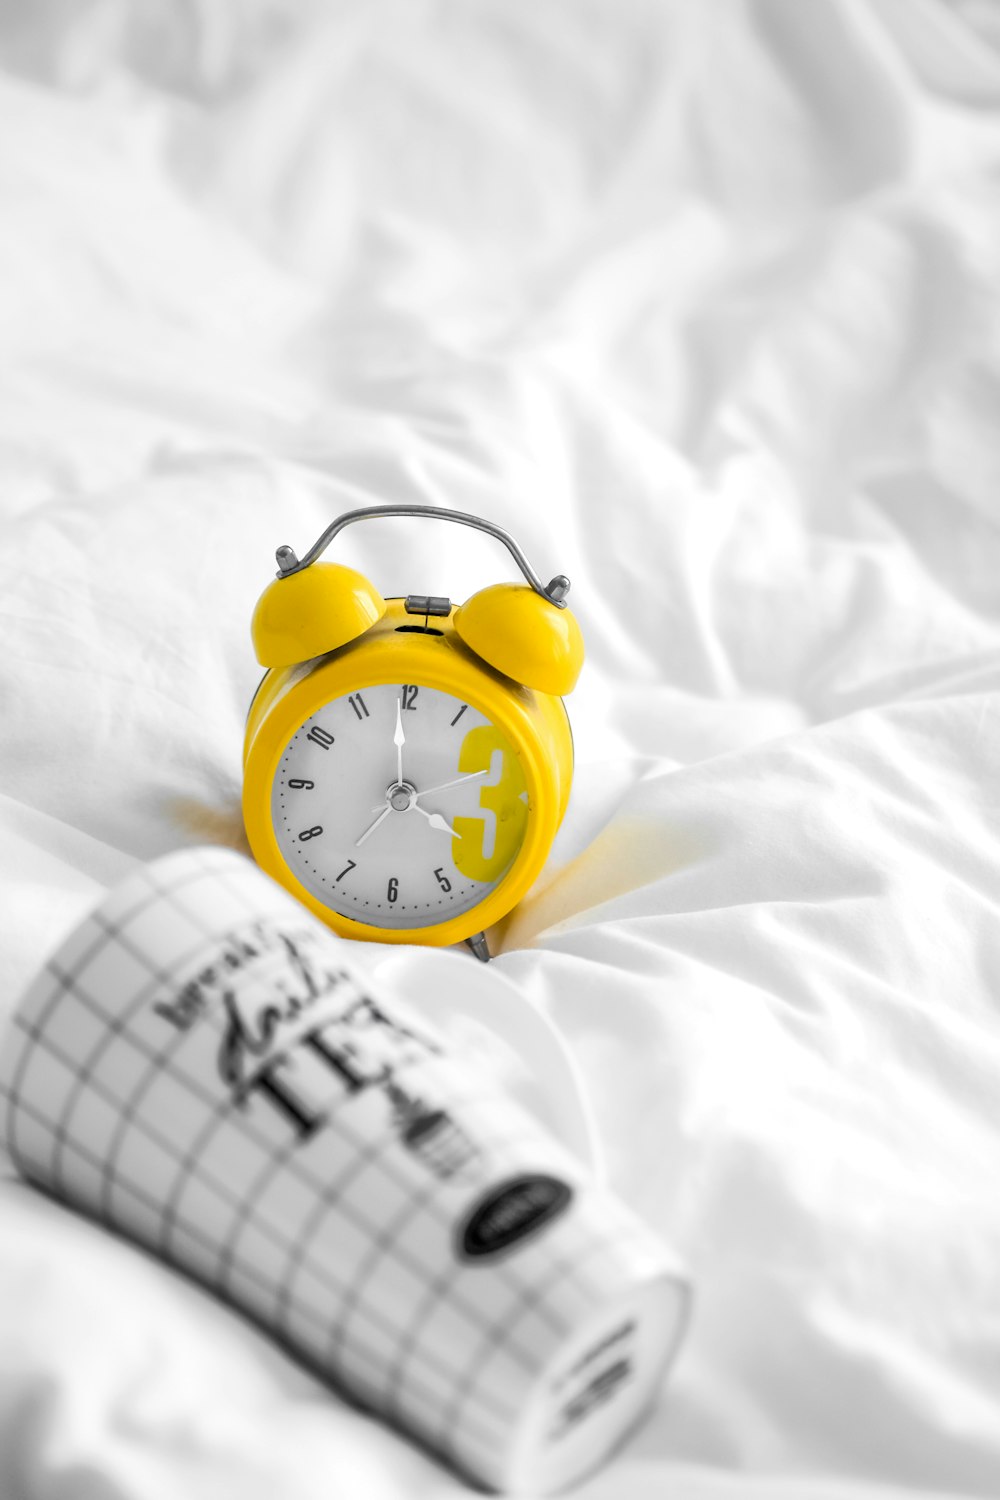 yellow and white analog alarm clock at 10 10